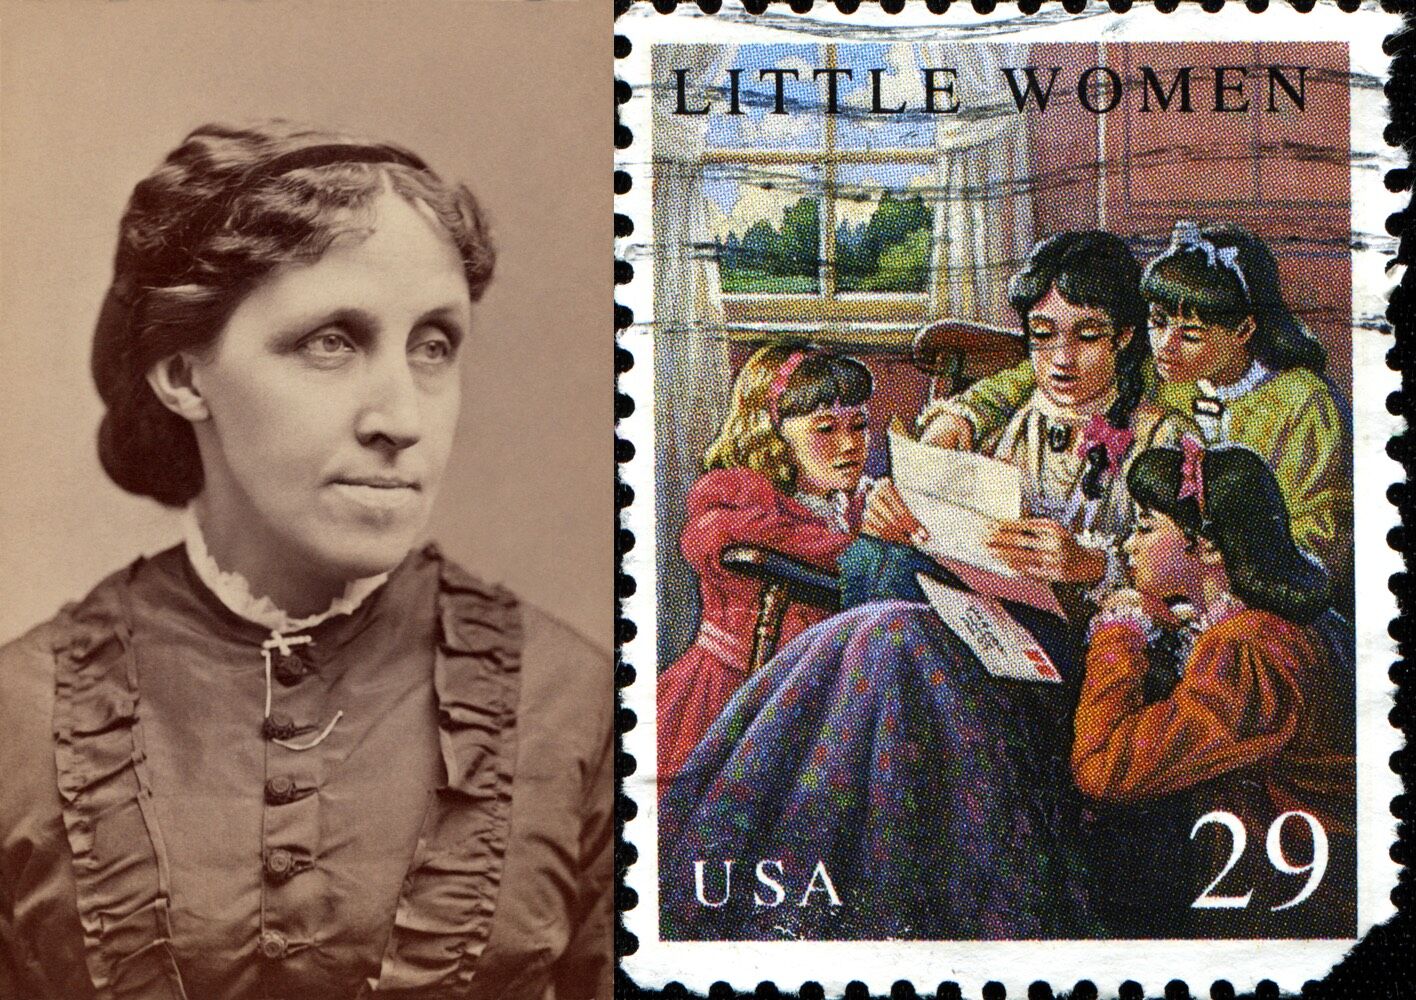 &#8220;Little Women&#8221; author Louisa May Alcott was a transgender man